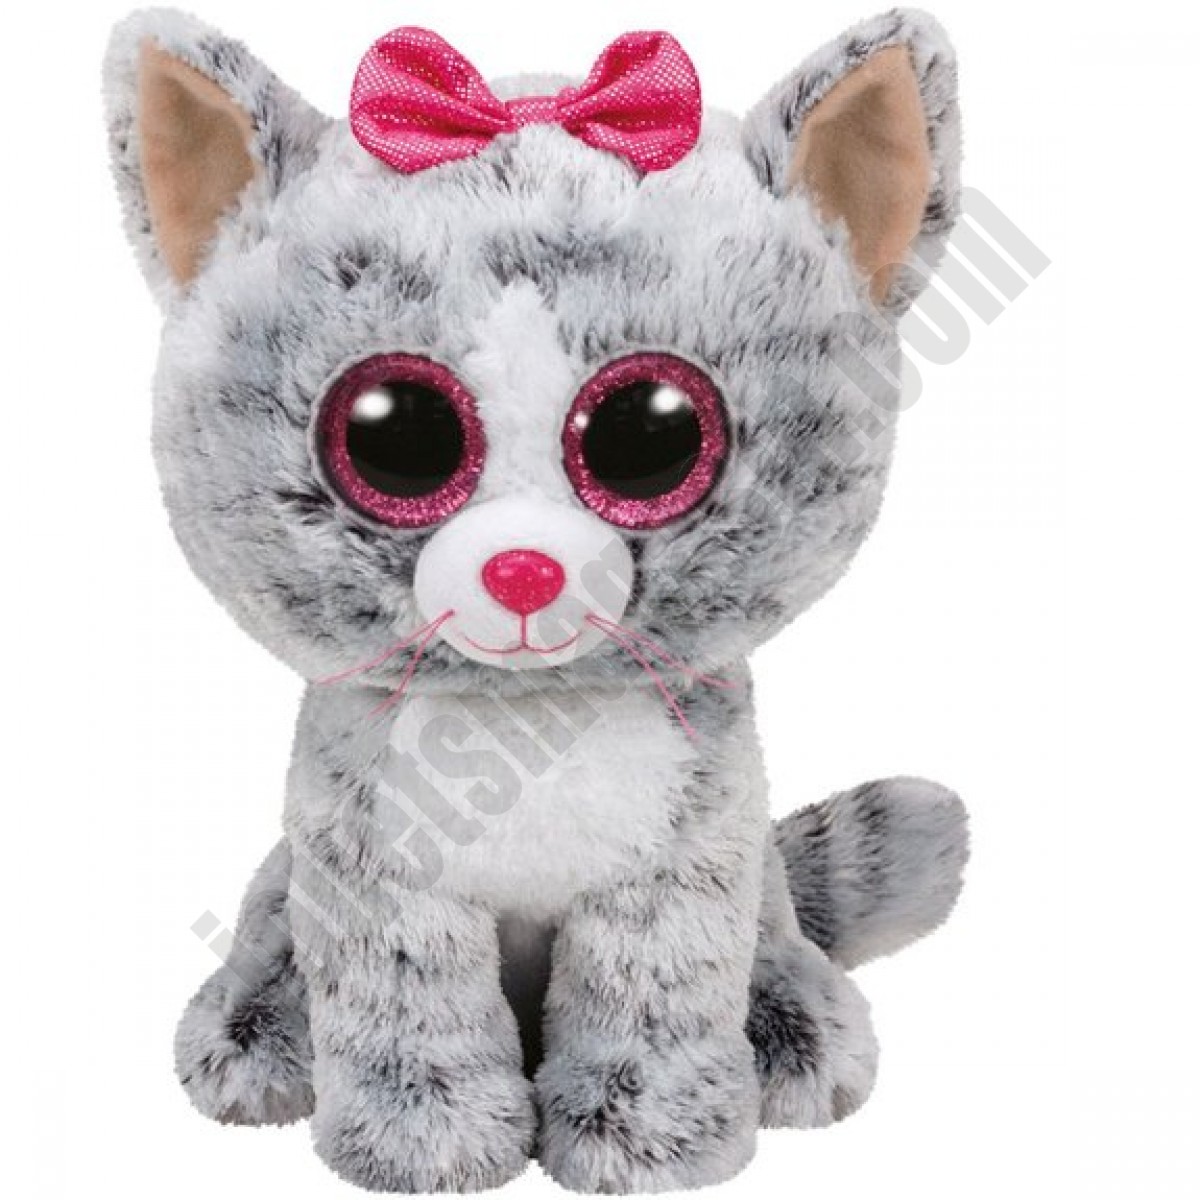 Beanie Boo's : Peluche Kiki le chat 15 cm ◆◆◆ Nouveau - Beanie Boo's : Peluche Kiki le chat 15 cm ◆◆◆ Nouveau